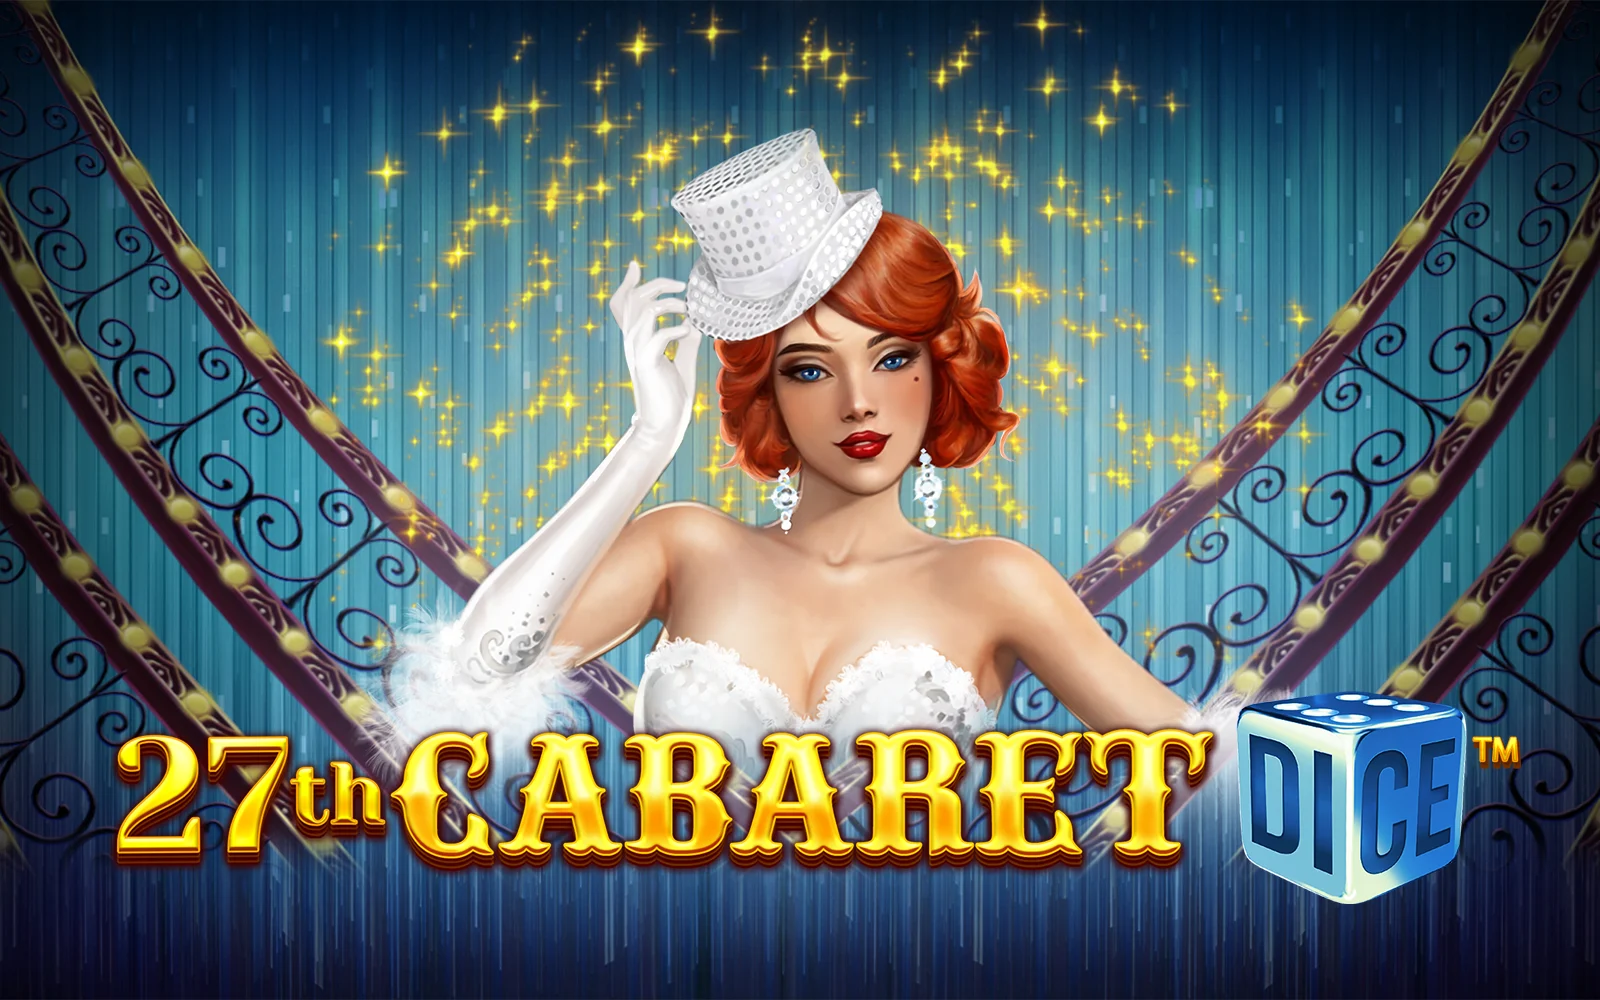 Jogue 27th Cabaret Dice no casino online Starcasino.be 